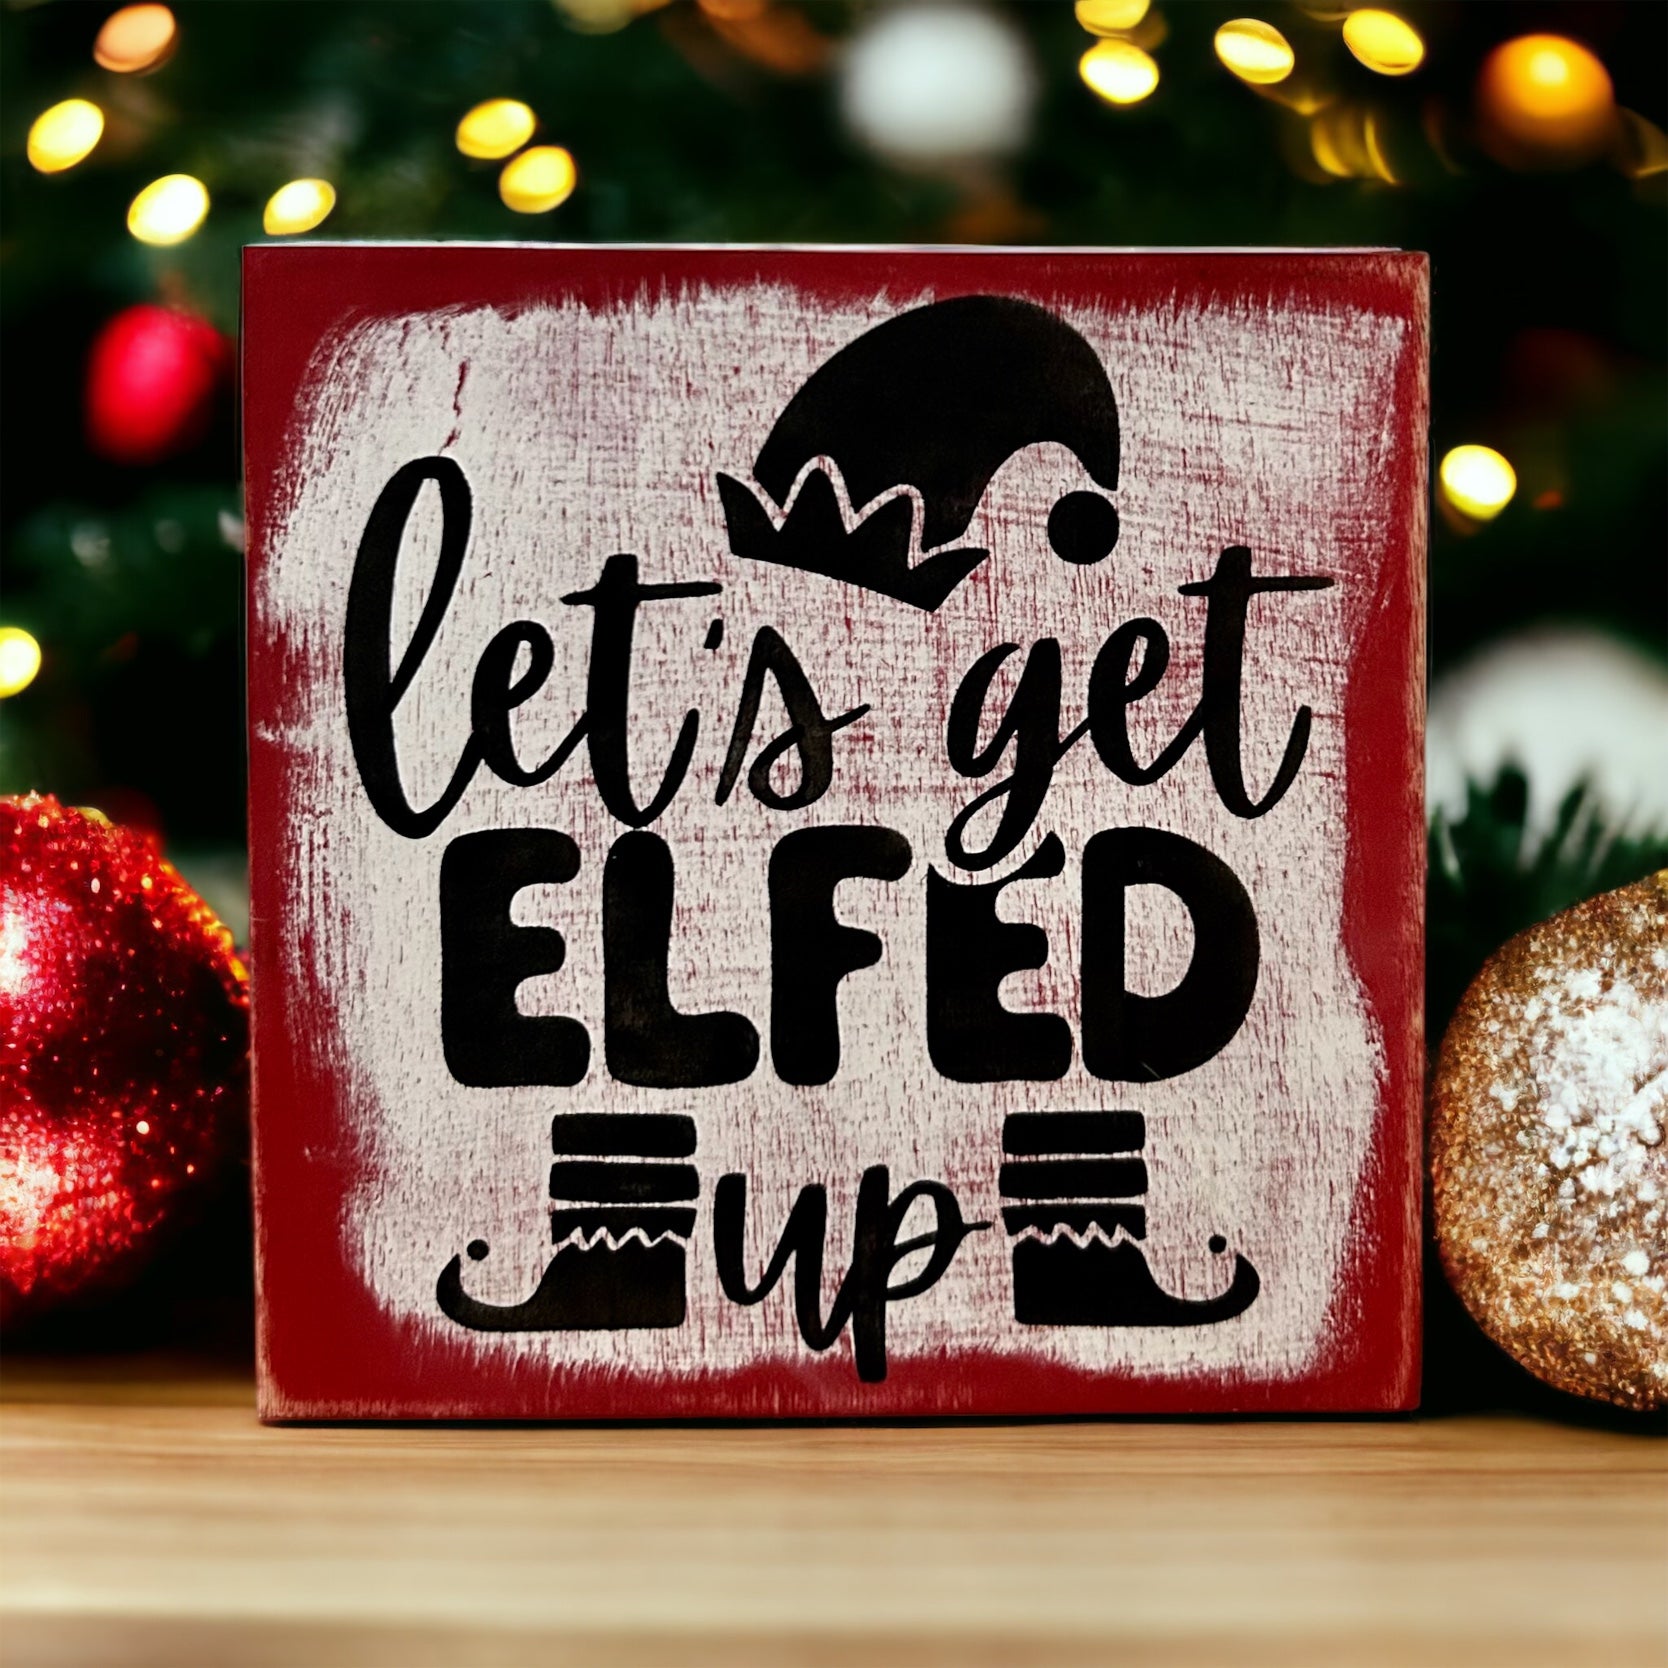 "let's get elfed up" wood sign